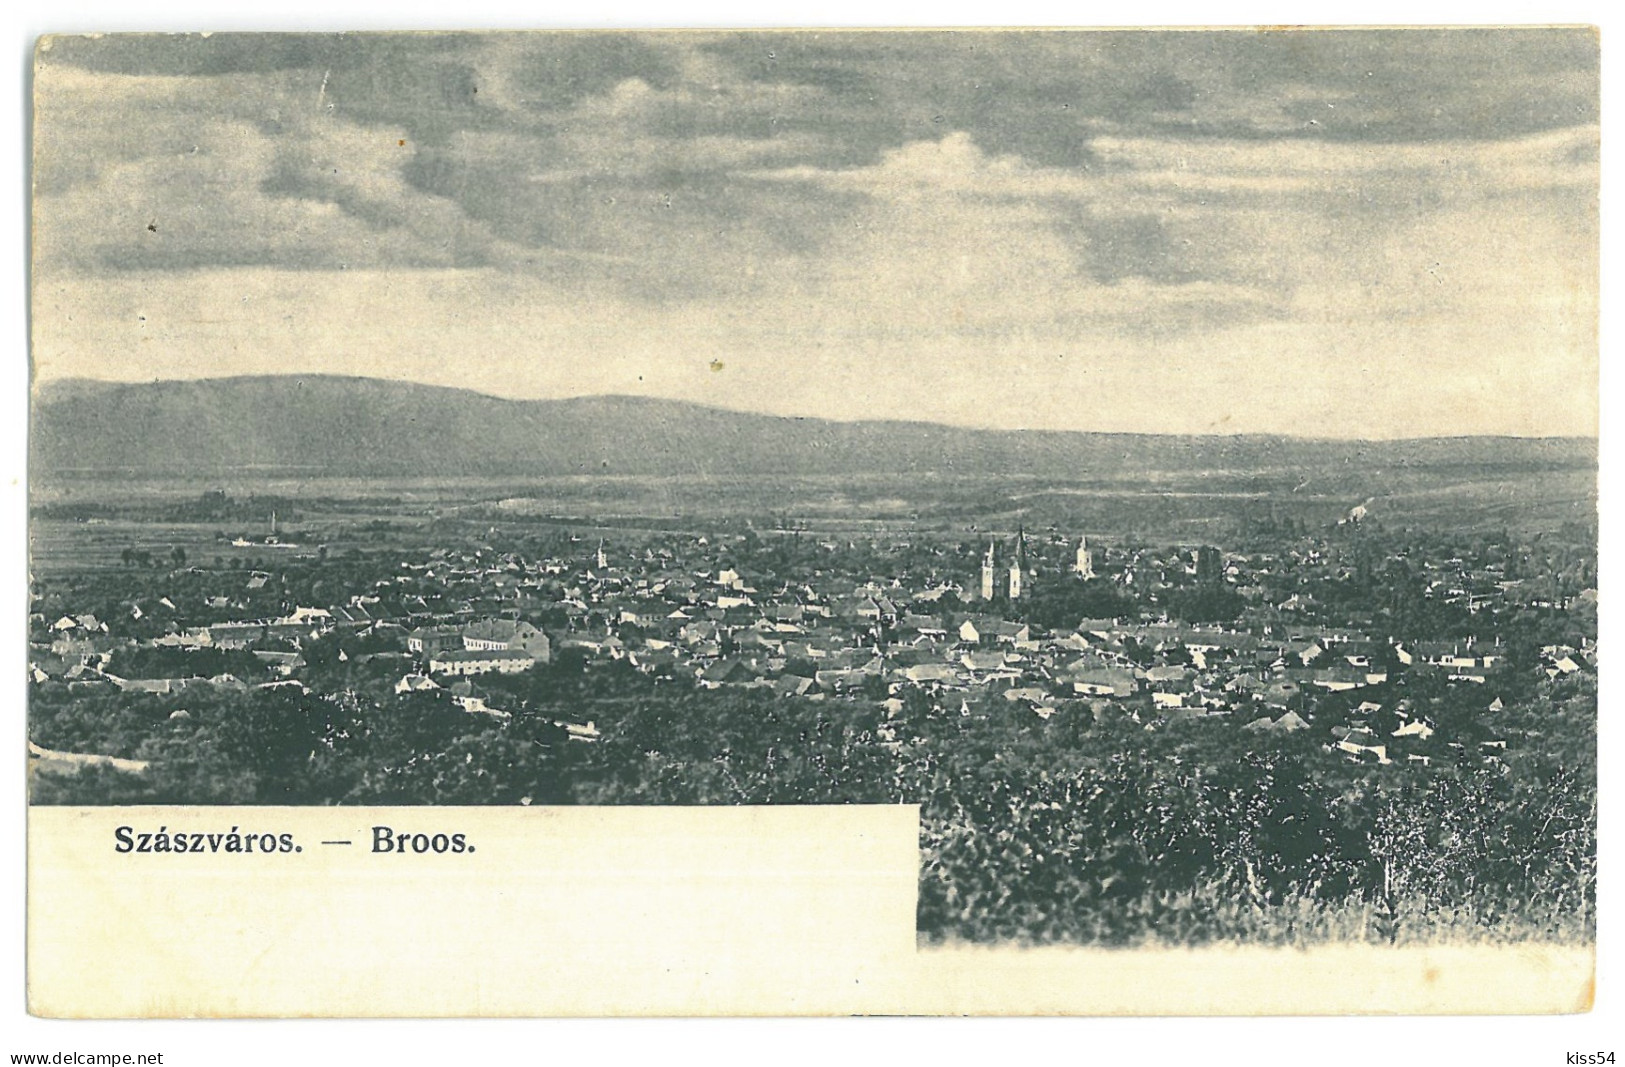 RO 35 - 23263 ORASTIE, Hunedoara, Panorama,  Romania - Old Postcard - Used - 1907 - Rumänien